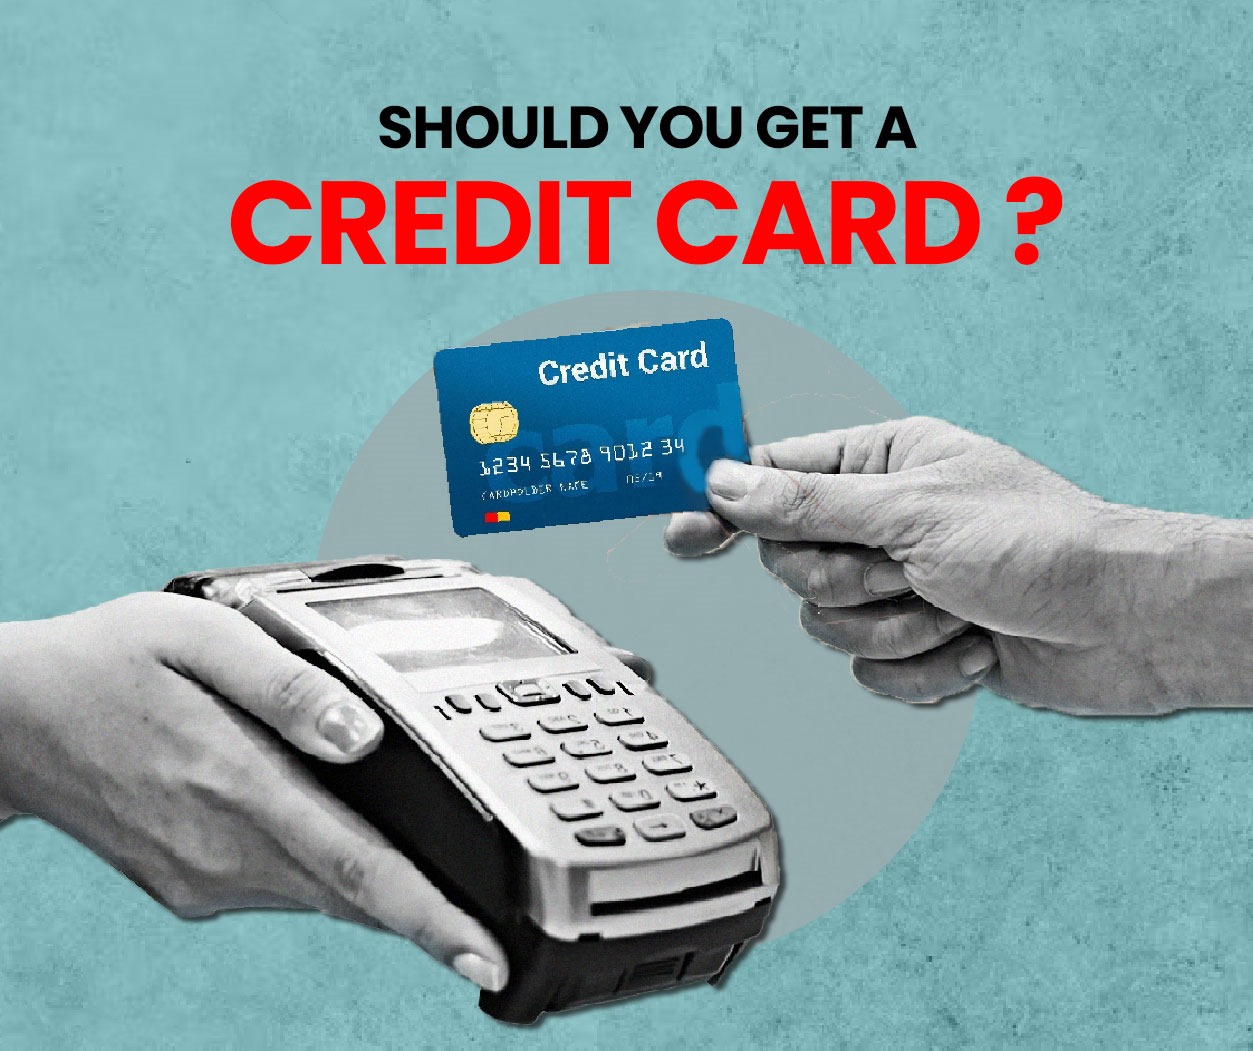 Should You Get A Credit Card?